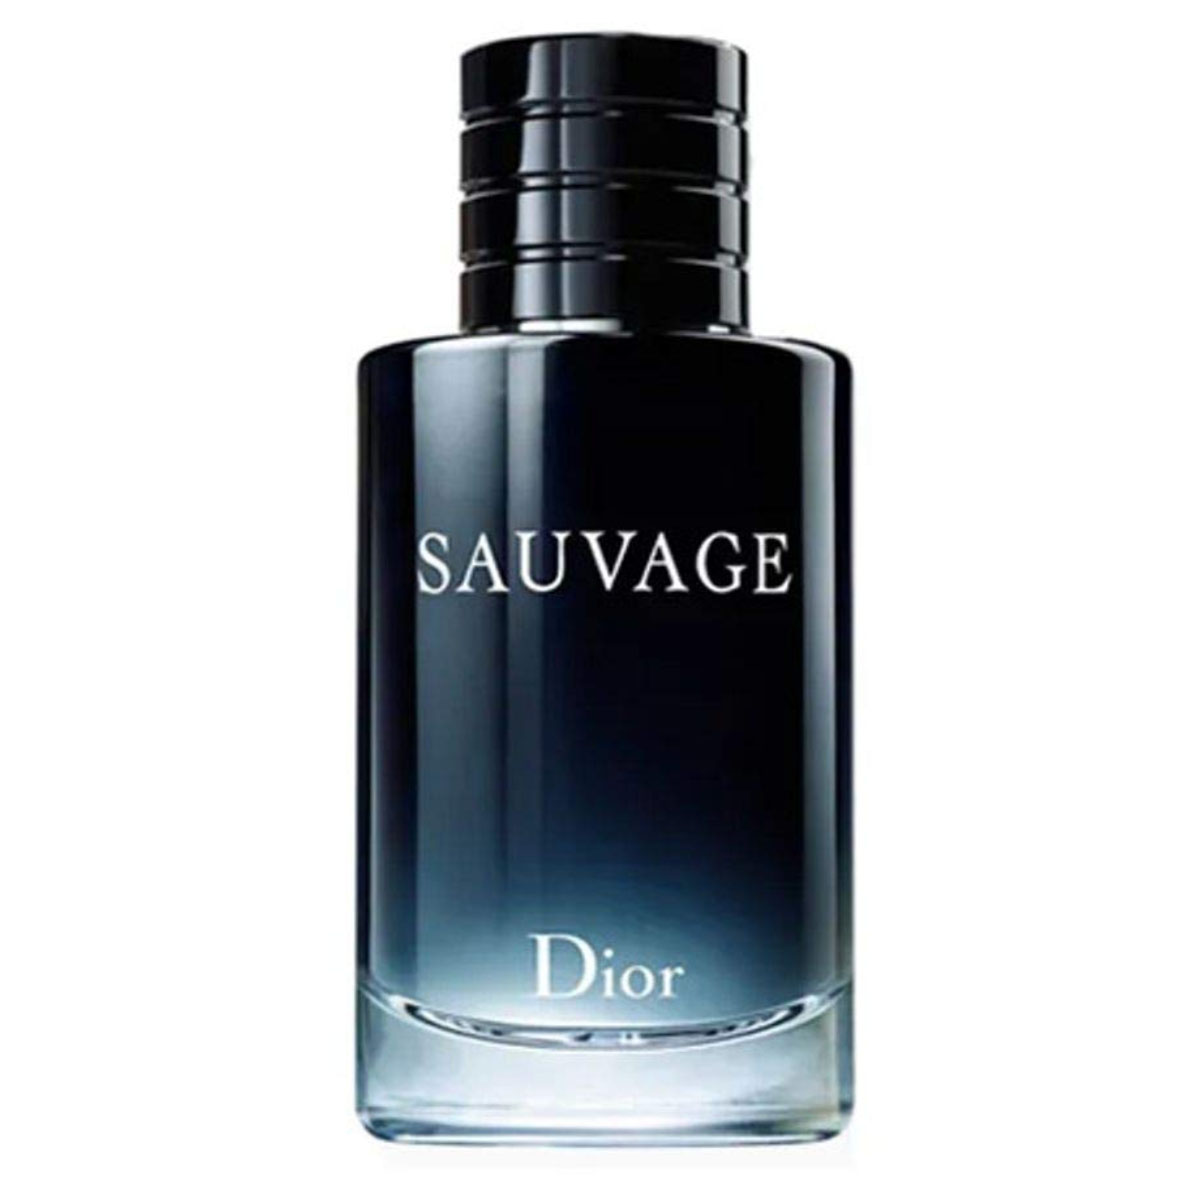 Christian Dior Sauvage Eau De Toilette Spray in blue bottle